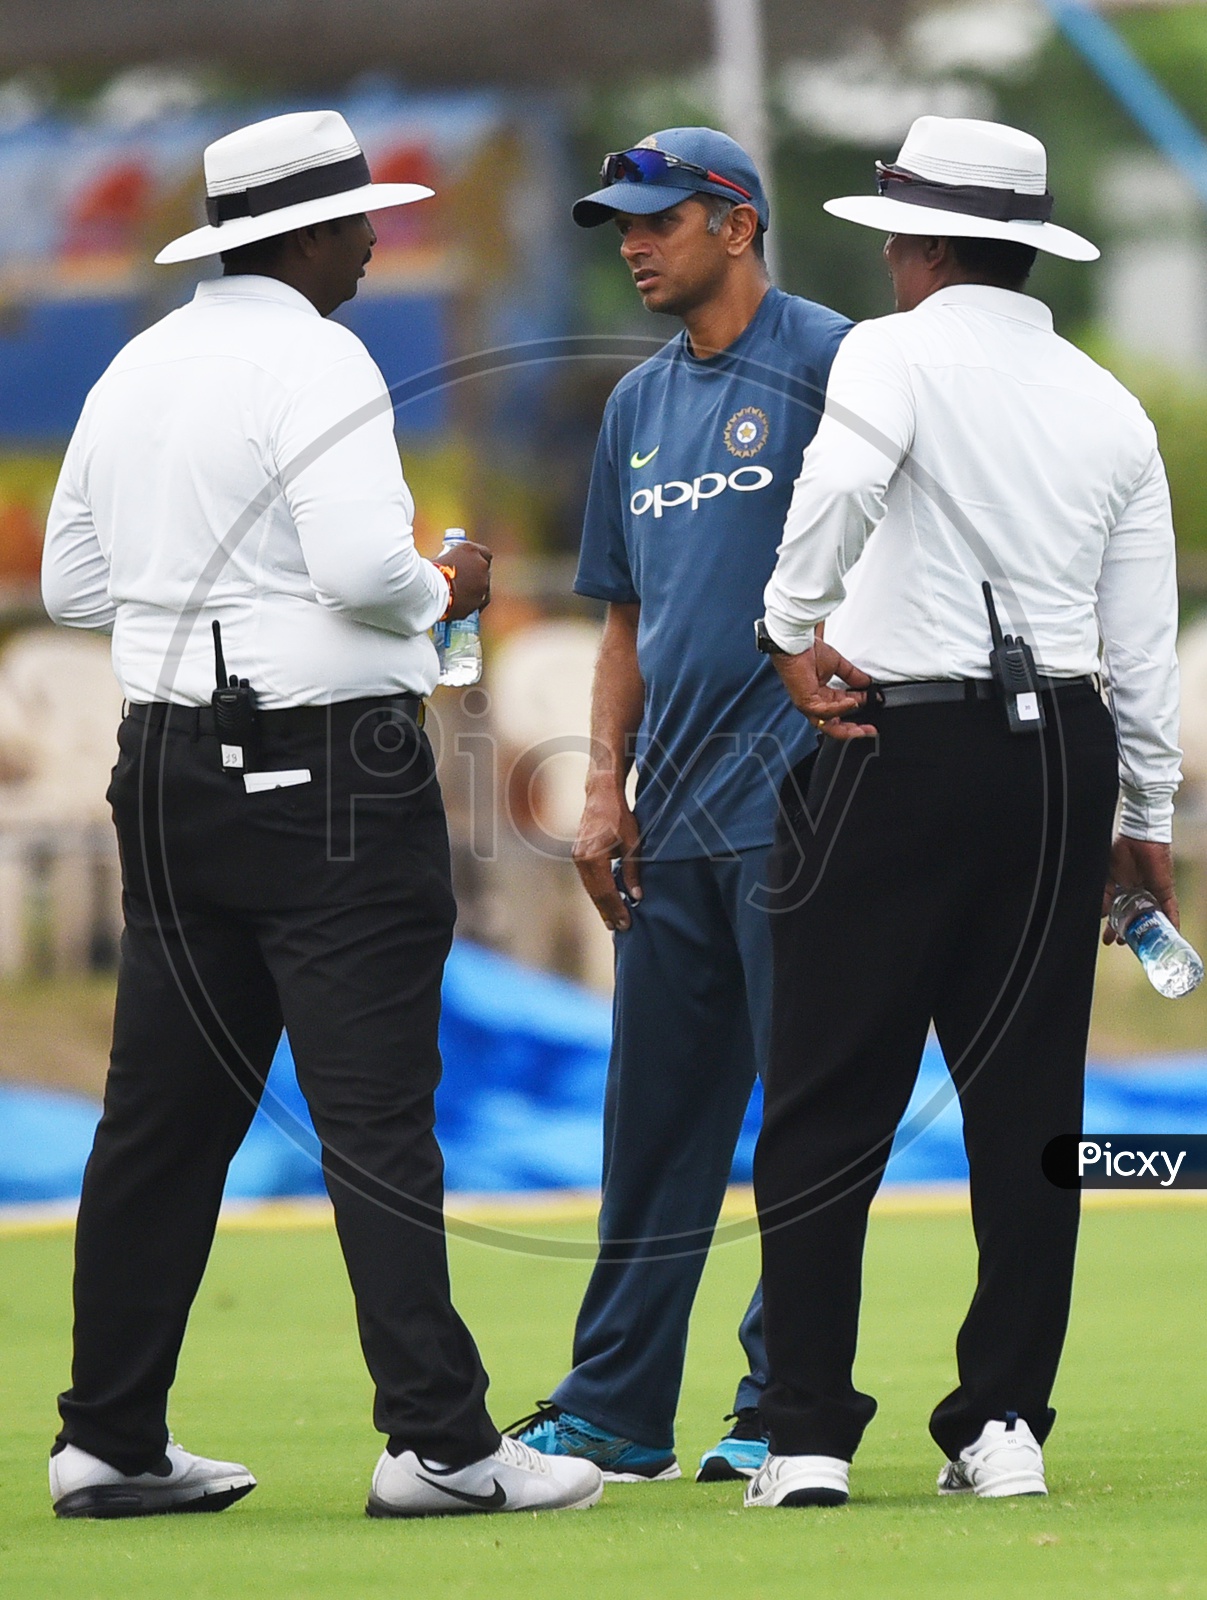 Rahul Dravid having a conversation with Umpires